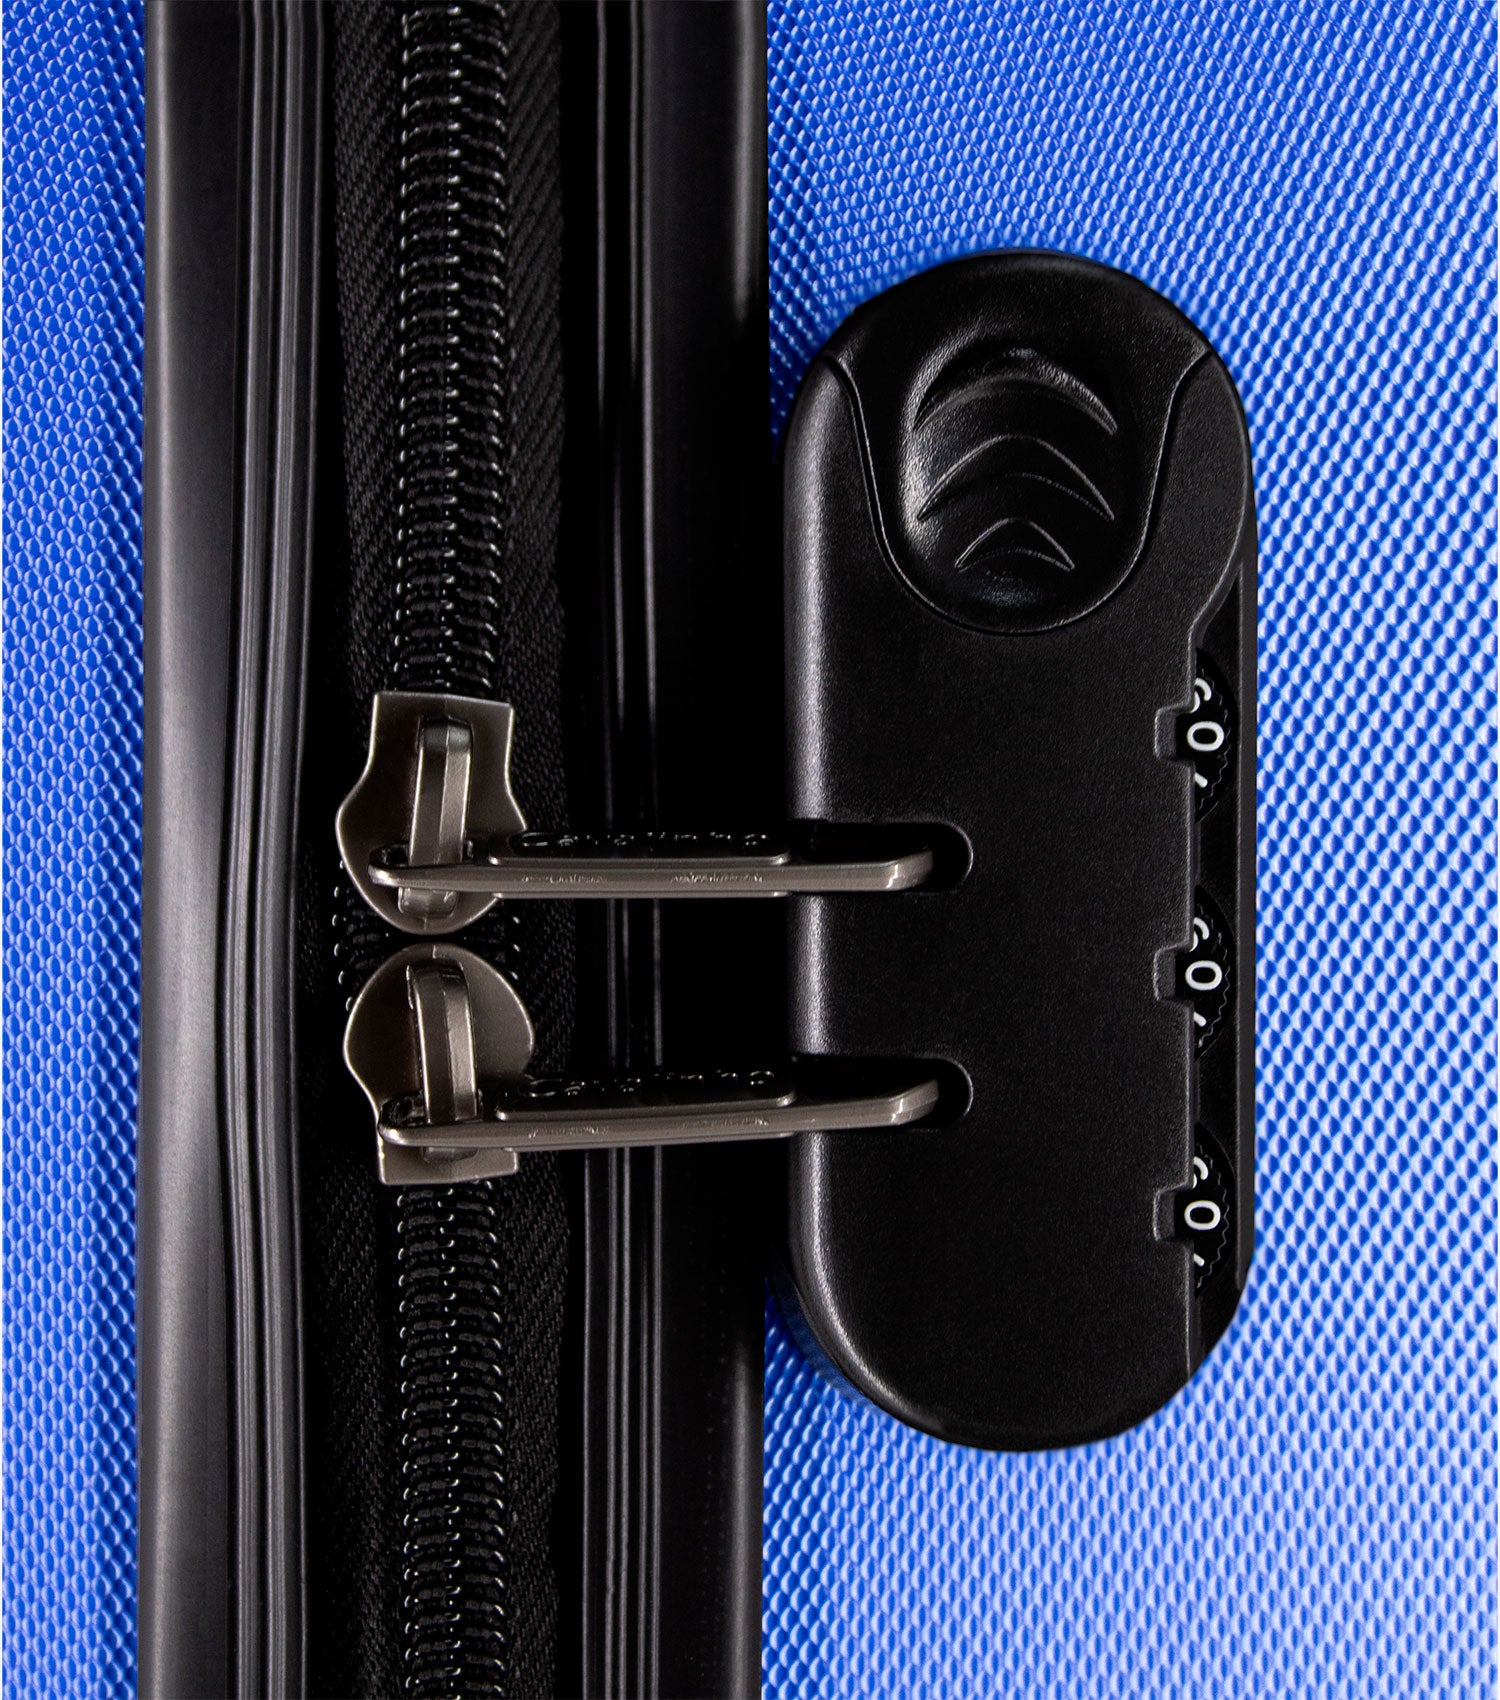 Cavalinho Bon Voyage Check-in Hardside Luggage (24") - 24 inch Blue - 68020005.03.24_P06